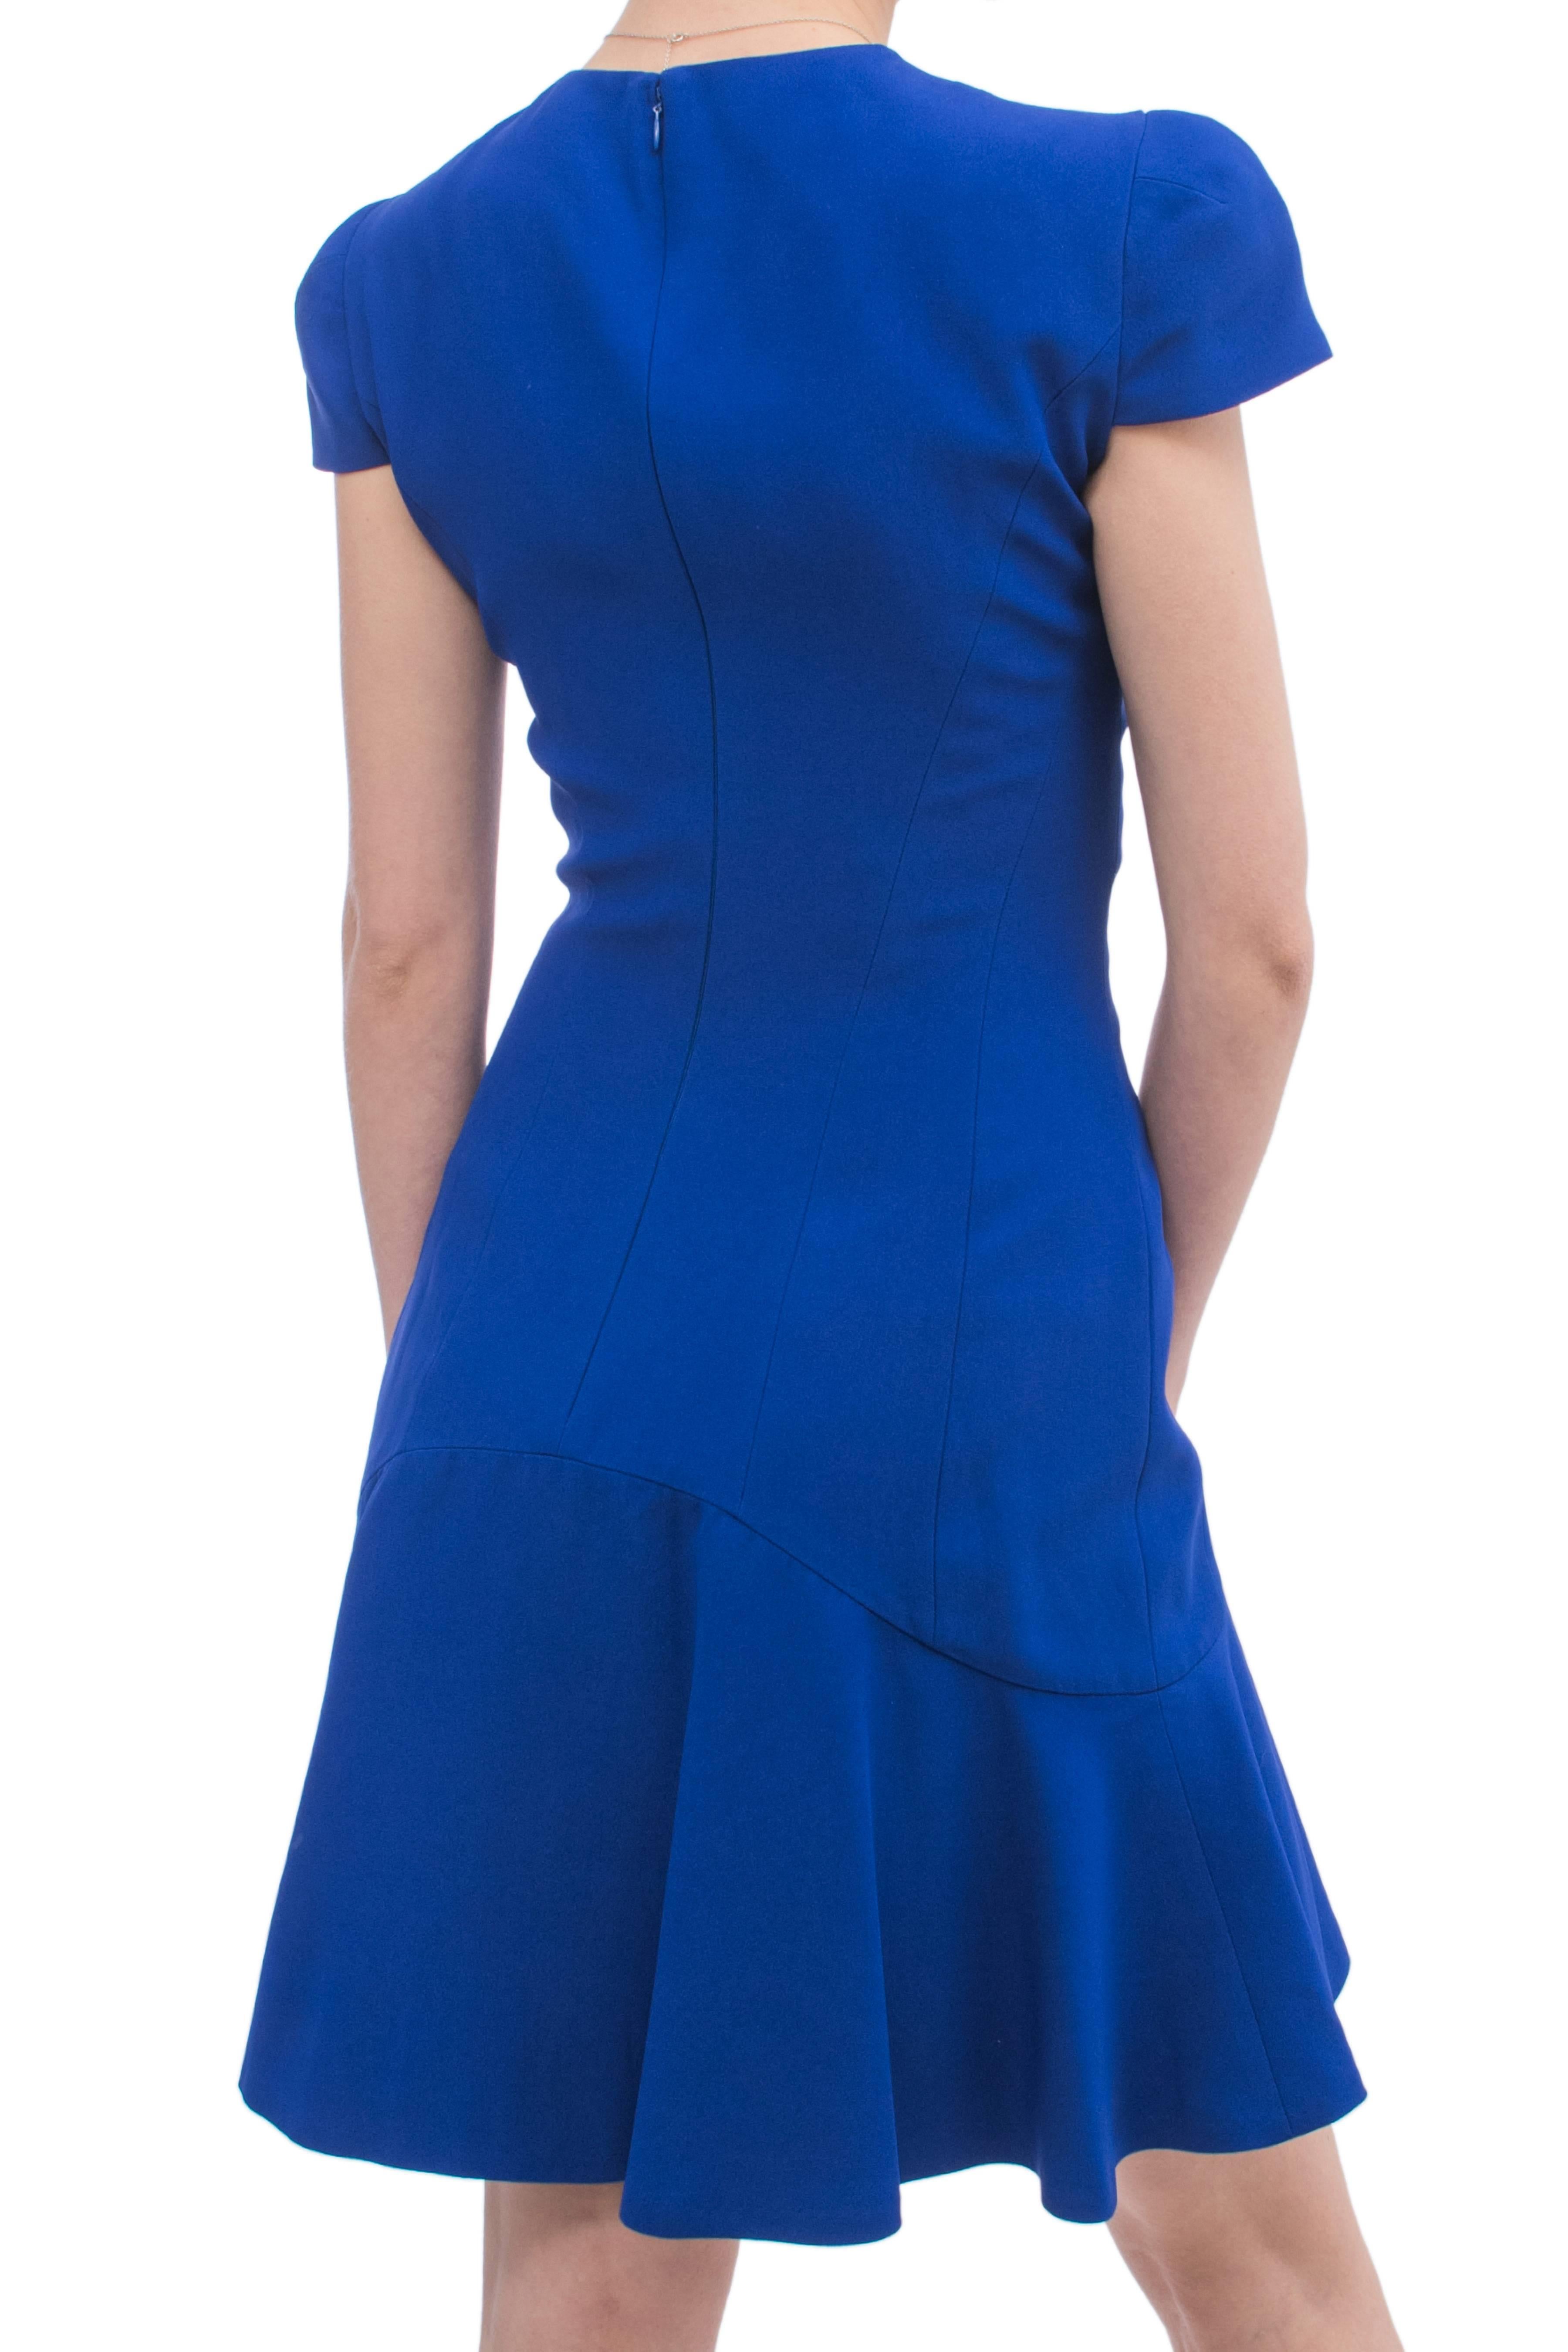 Women's Alexander McQueen Cobalt Blue Flared Crepe Dress